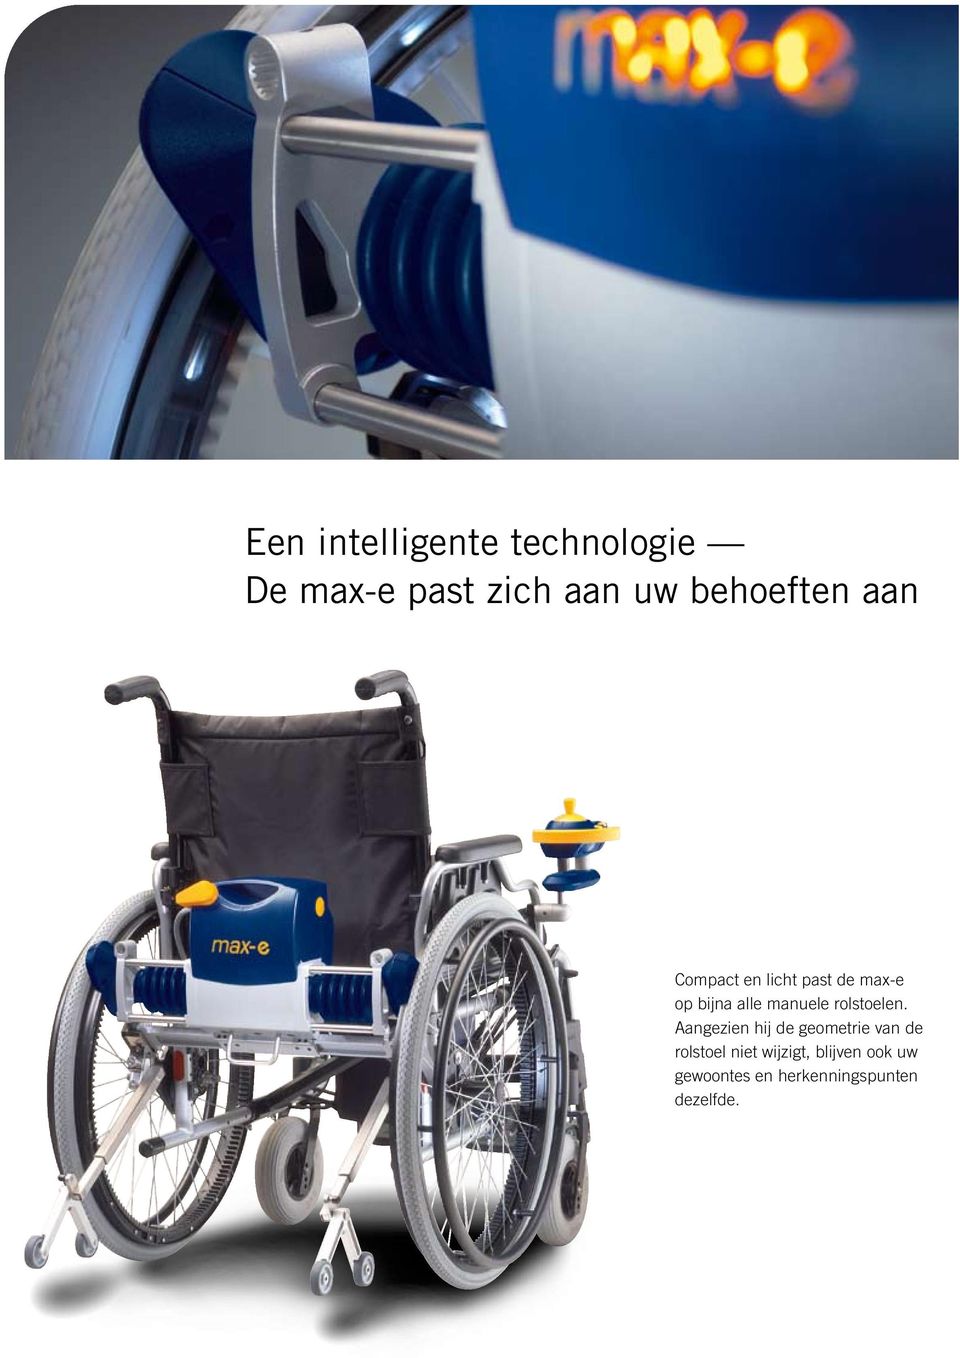 manuele rolstoelen.